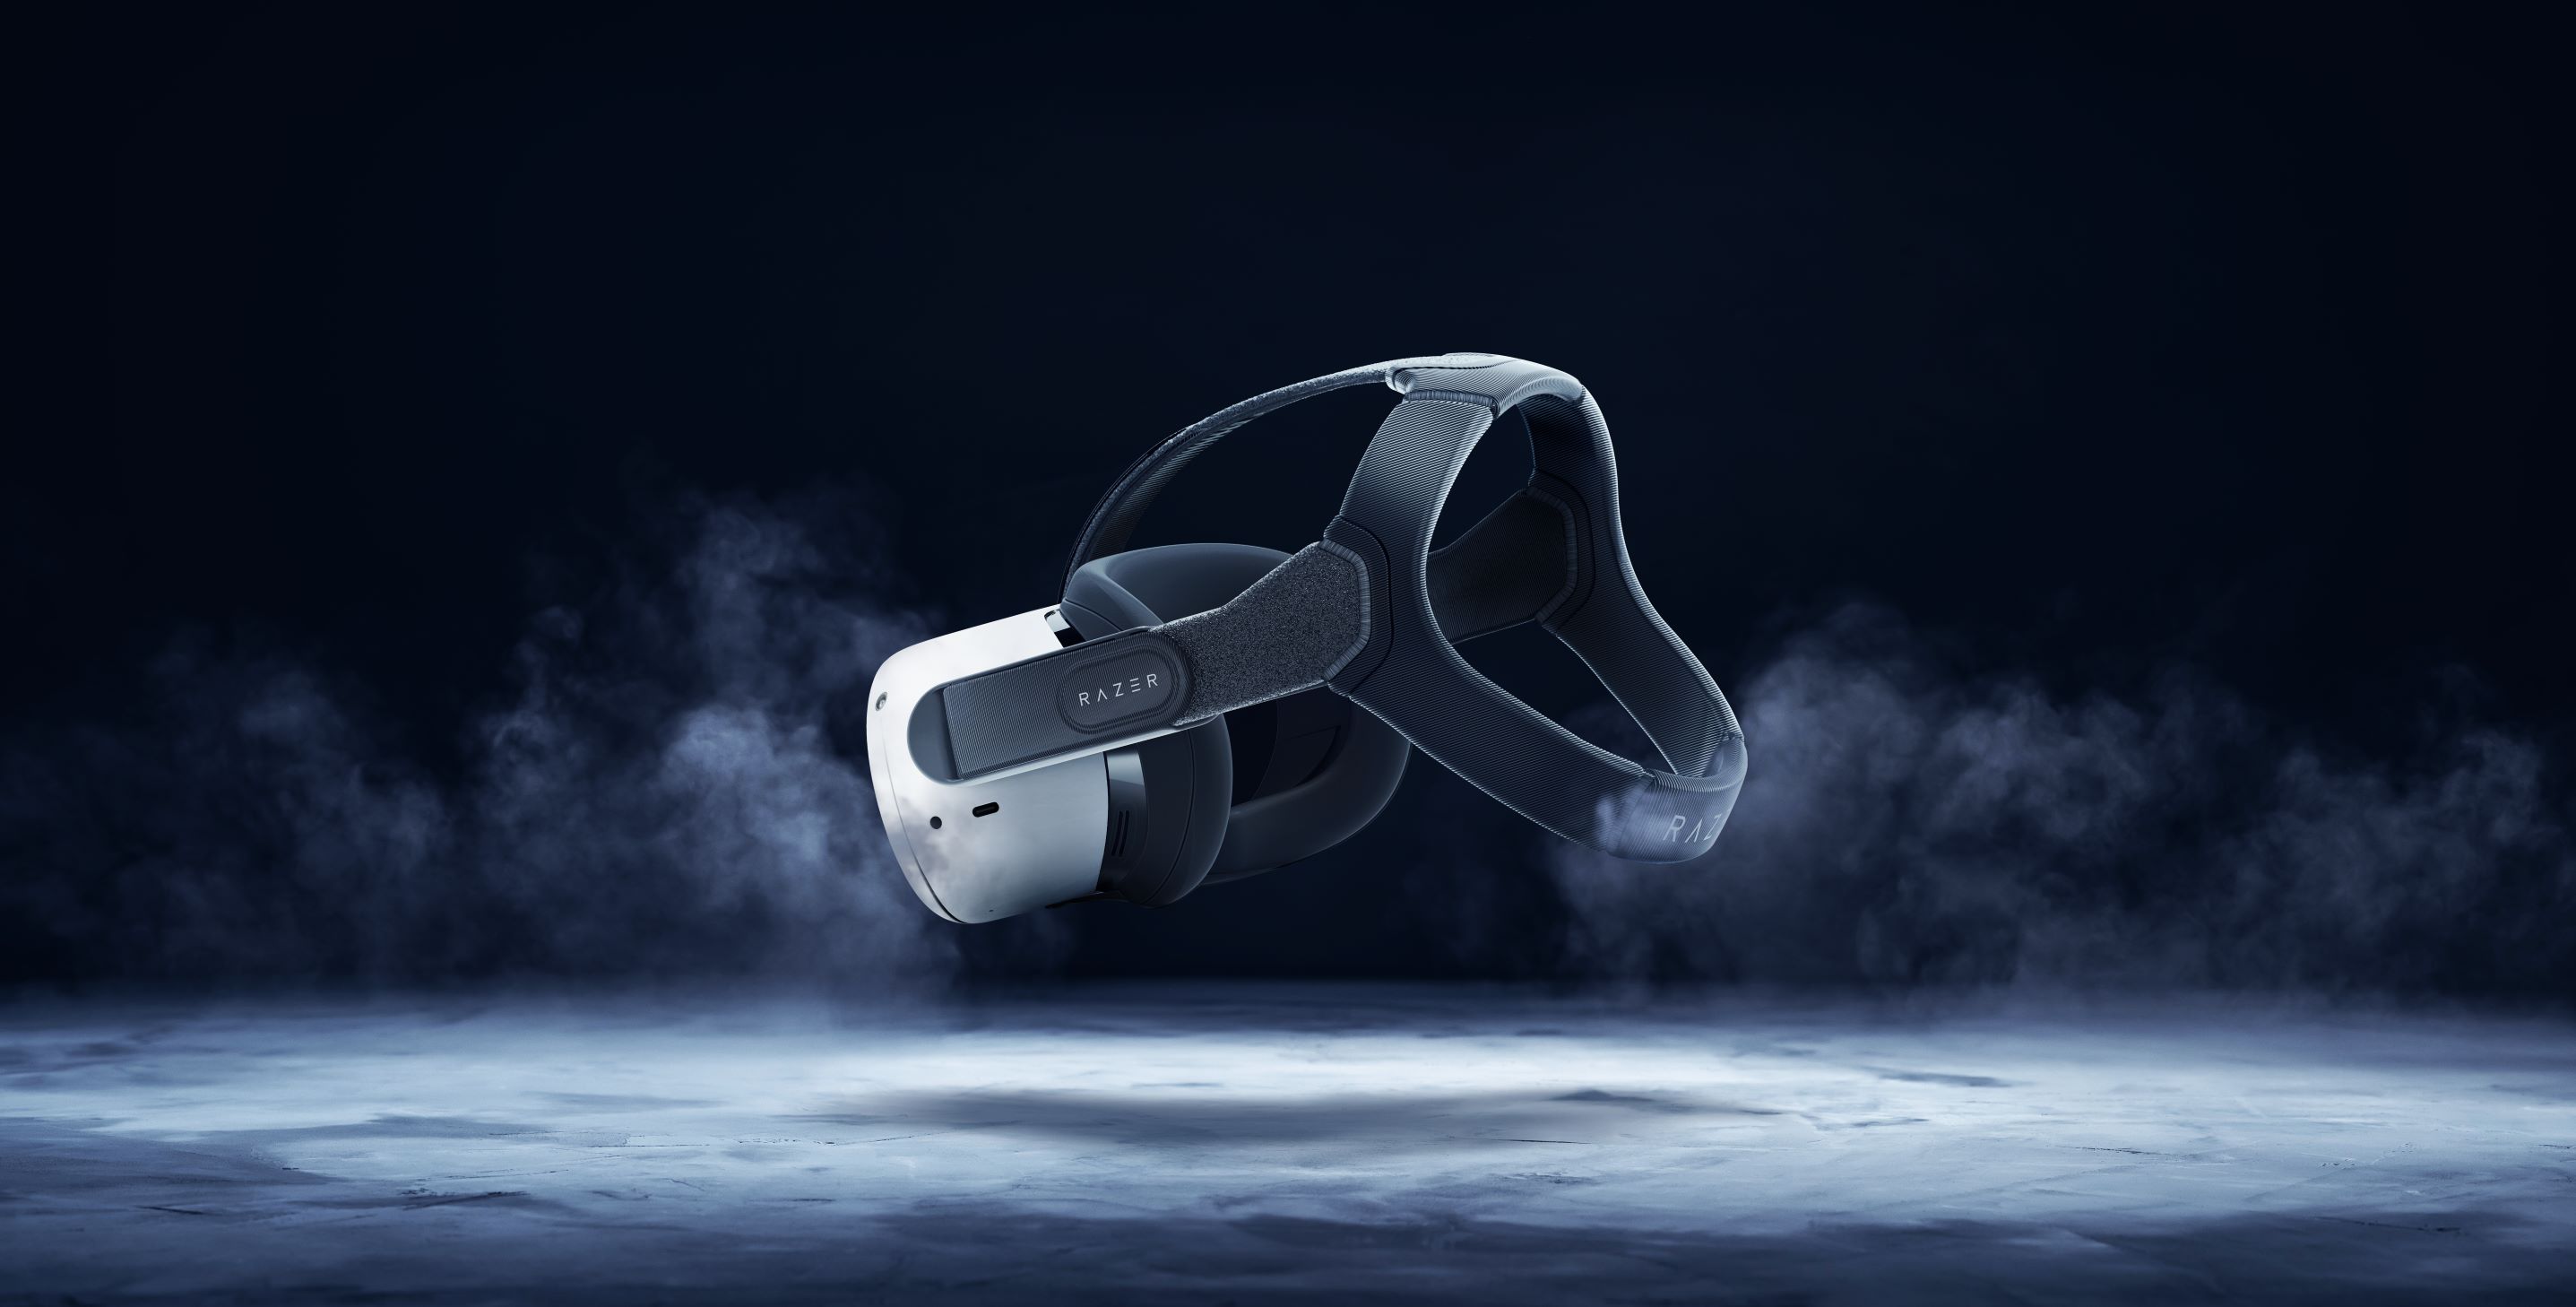 Power Wash Simulator VR Looks Set To Overcome The Pressure